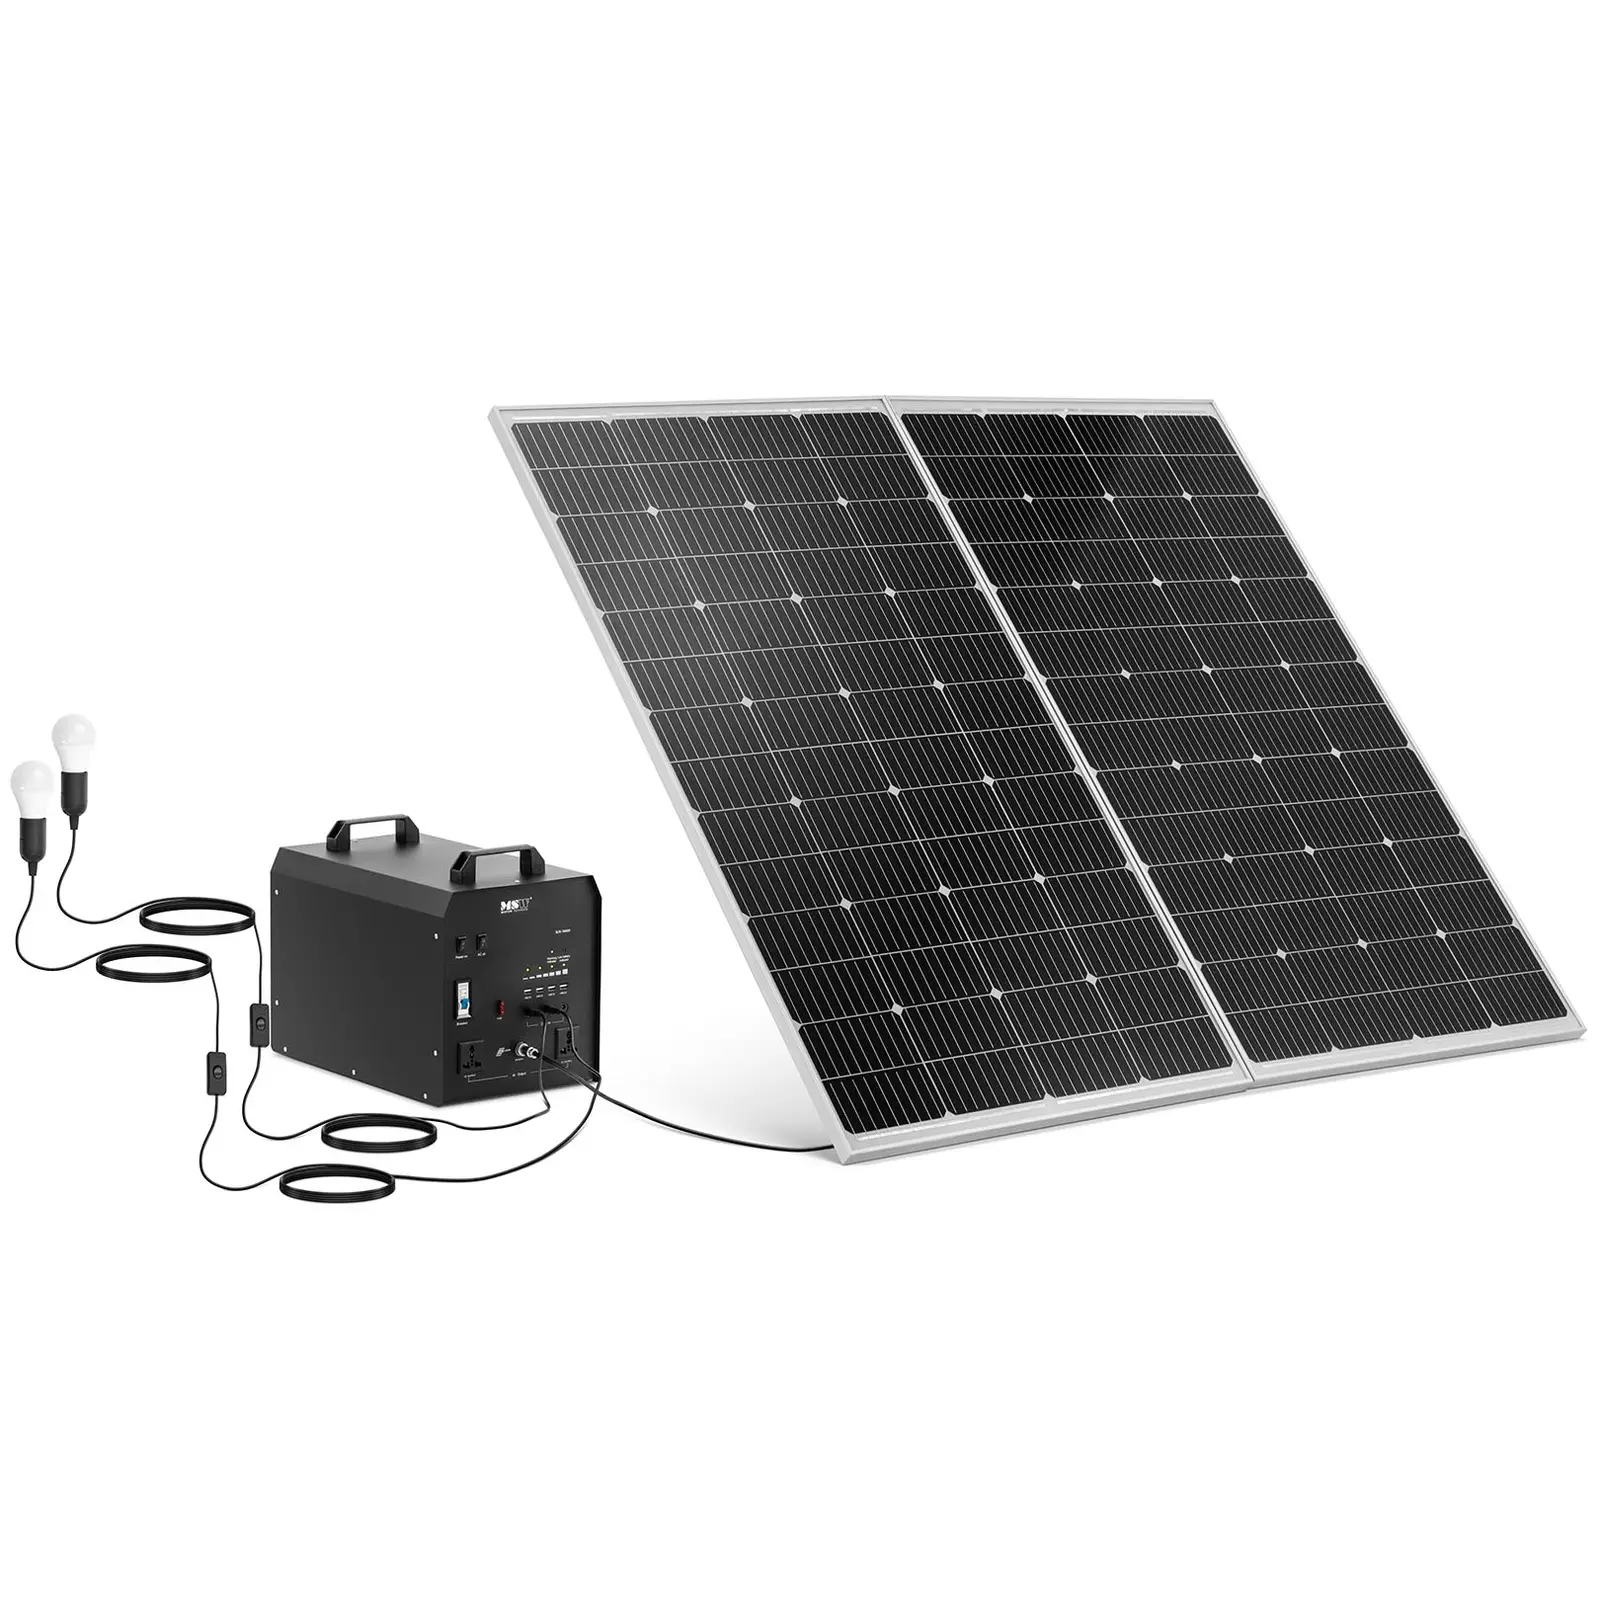 Solar Panel Kit with solar panel and inverter - 1800 W - 5 / 12 /230 V - 2 LED lights